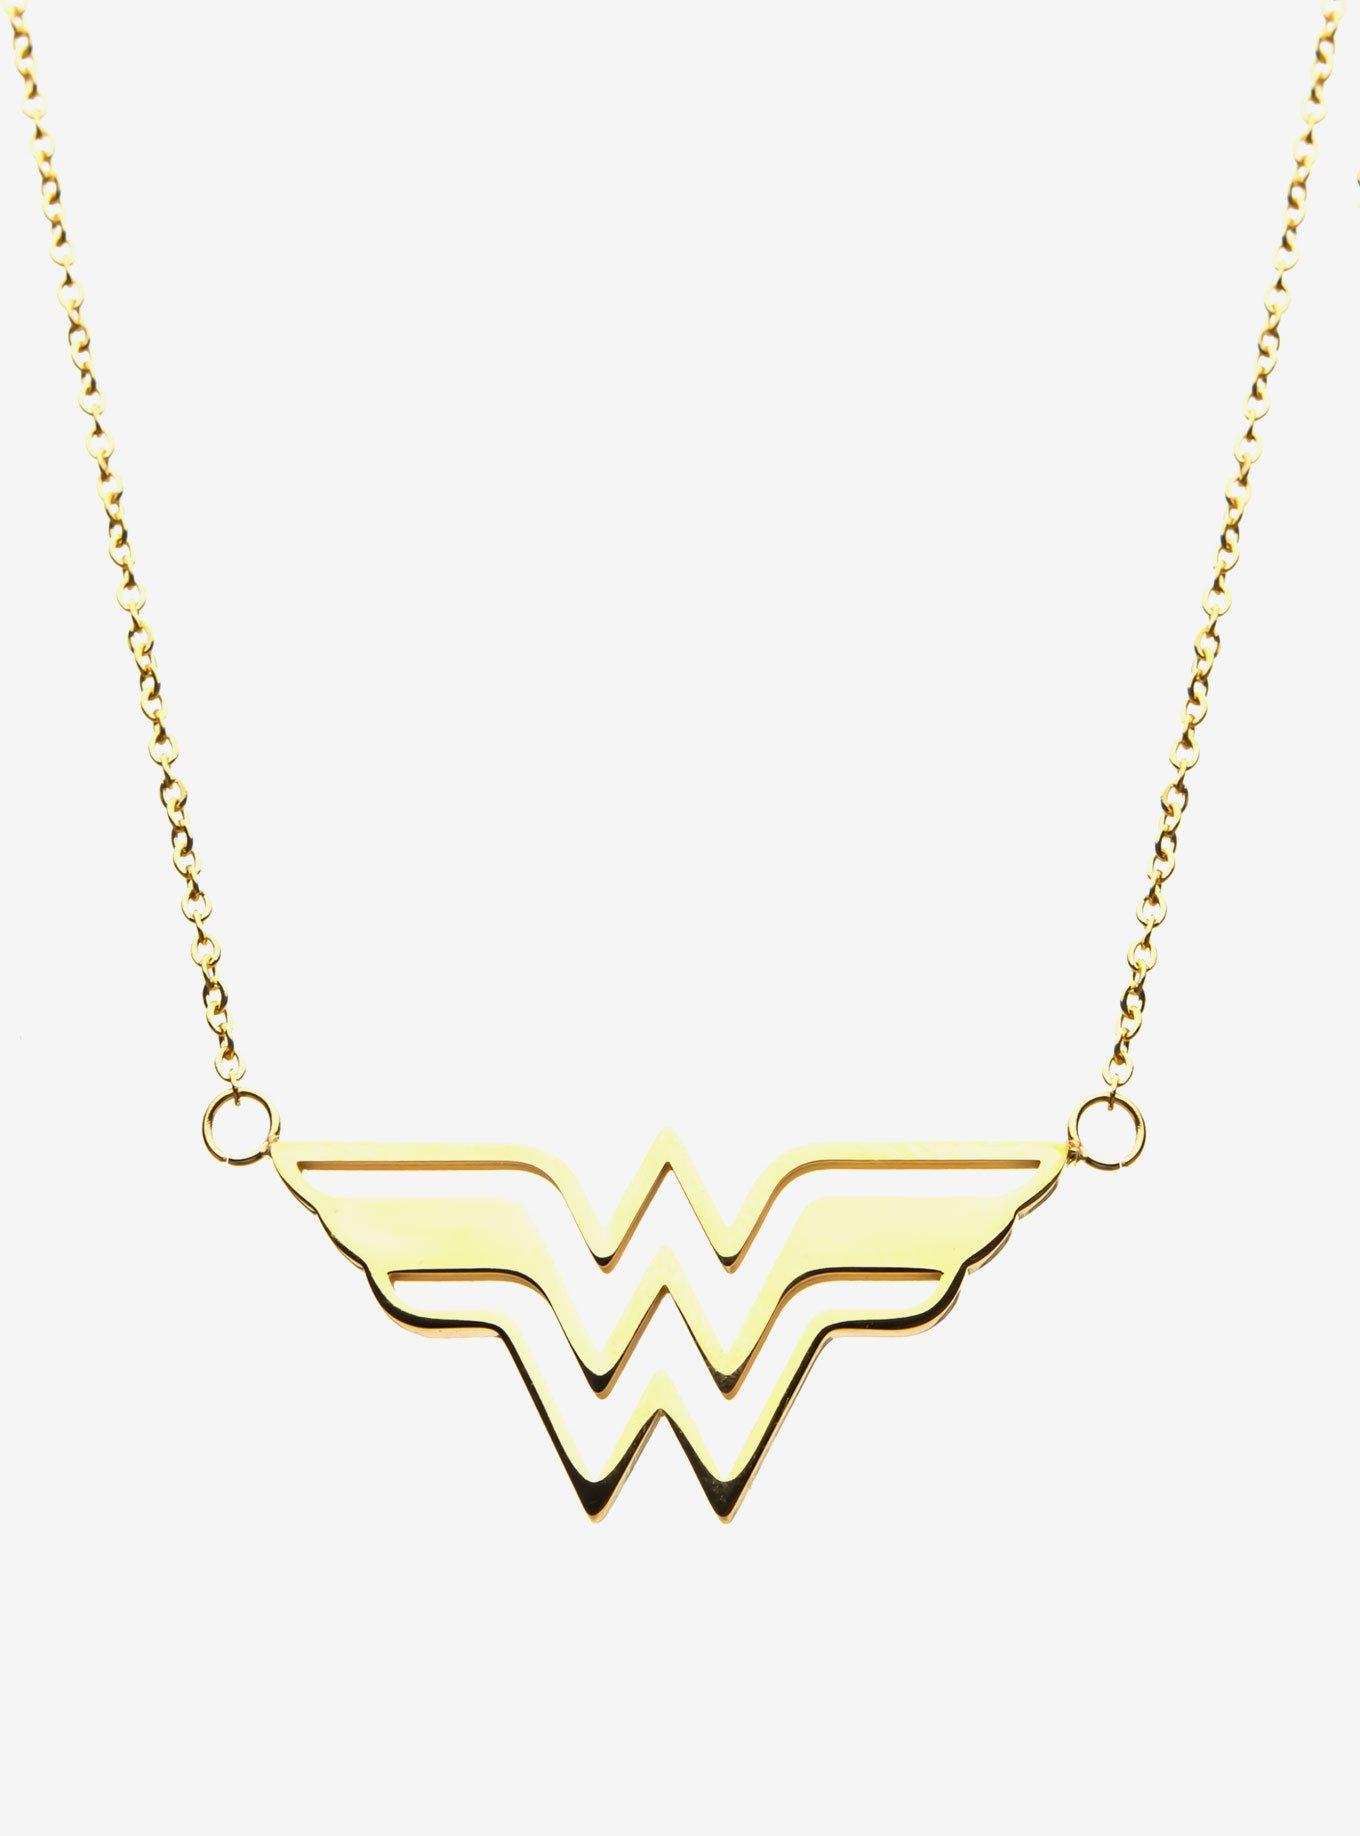 DC Comics Gold Plated Wonder Woman Necklace, , hi-res